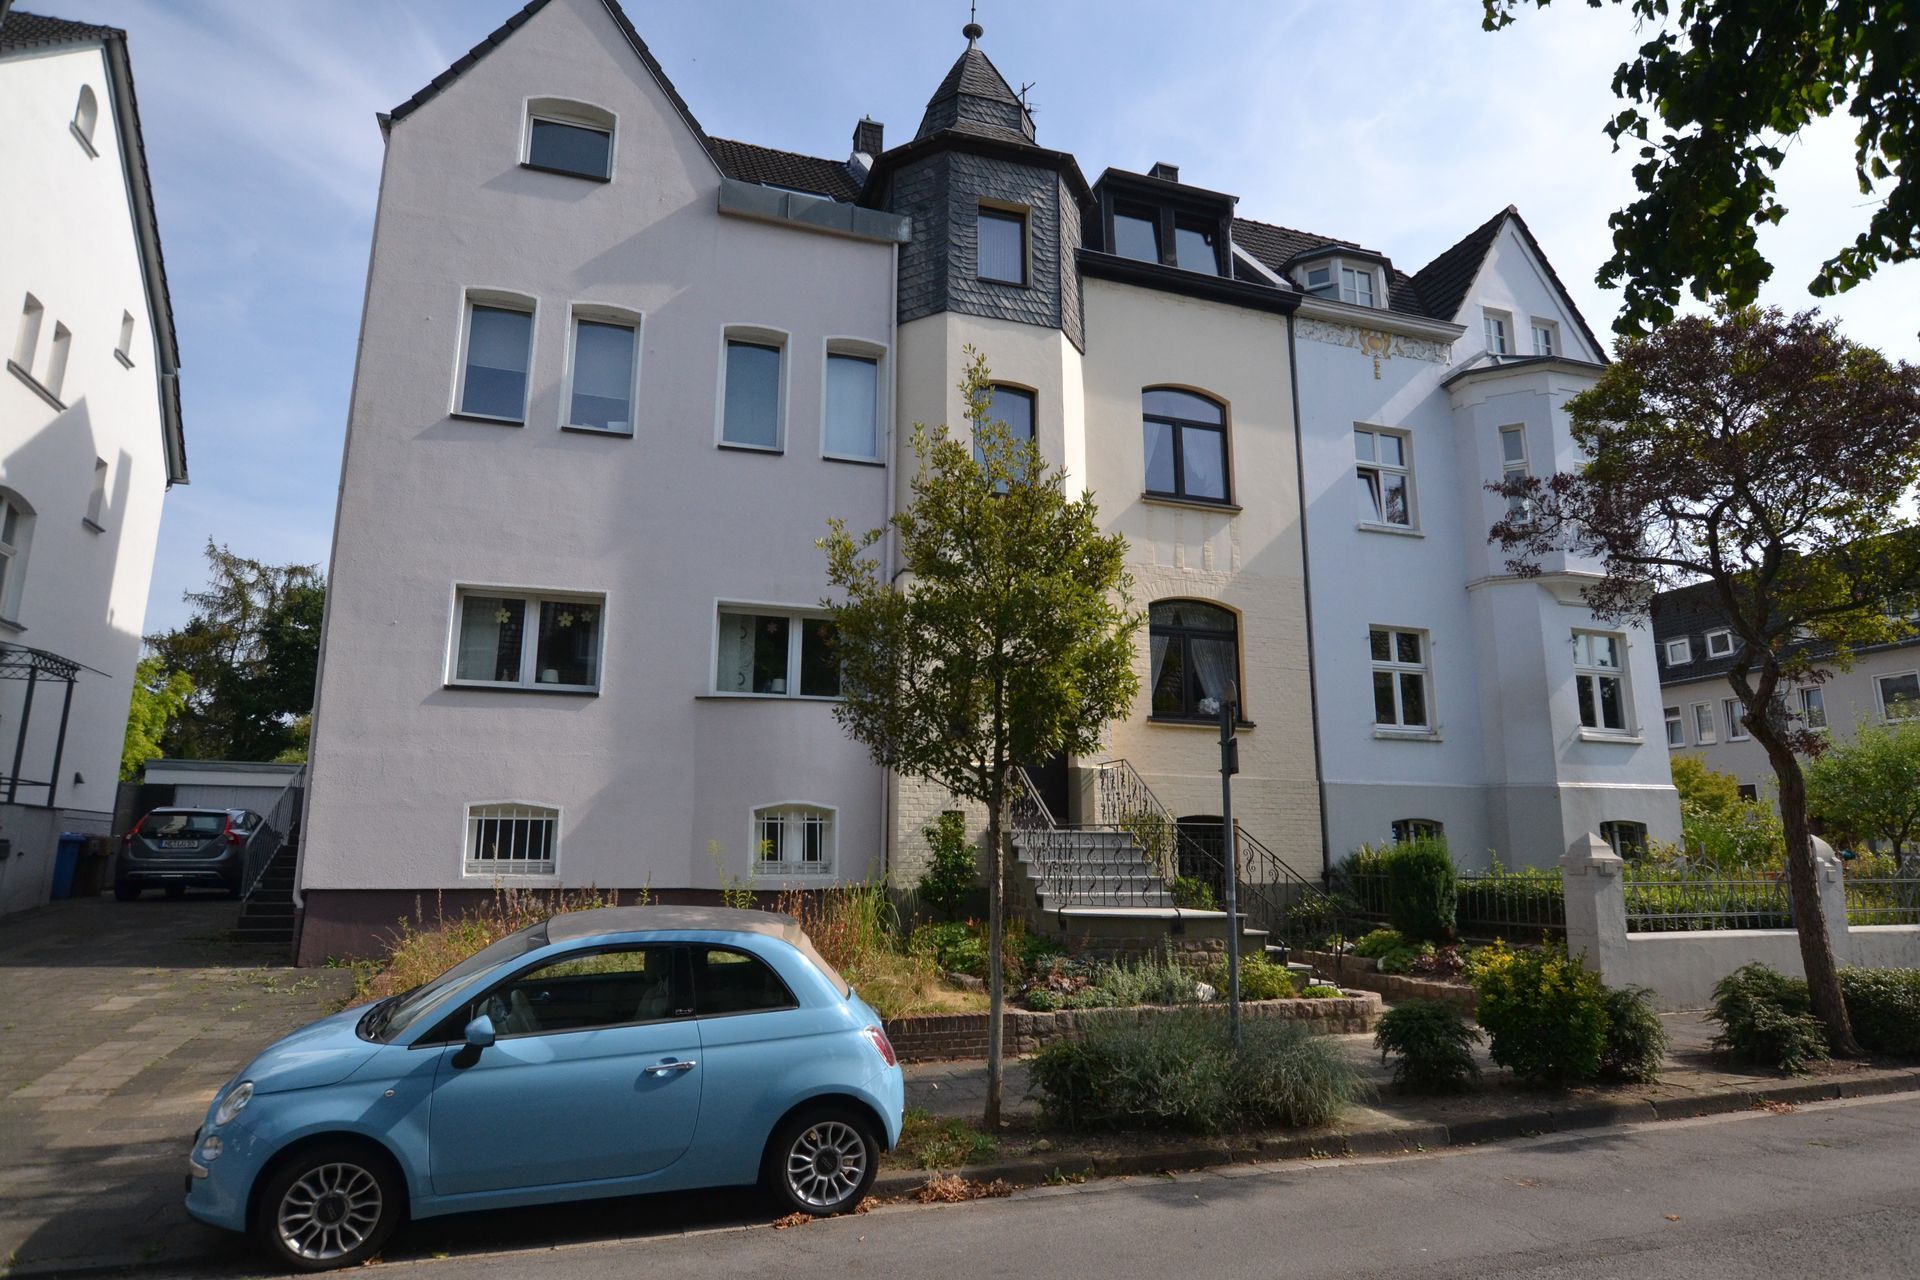 PETER BUSCH IMMOBILIEN GMBH - Immobilienangebot - Neuss - Reihenmittelhaus - Stadthaus in exponierter Lage am Neusser Stadtgarten